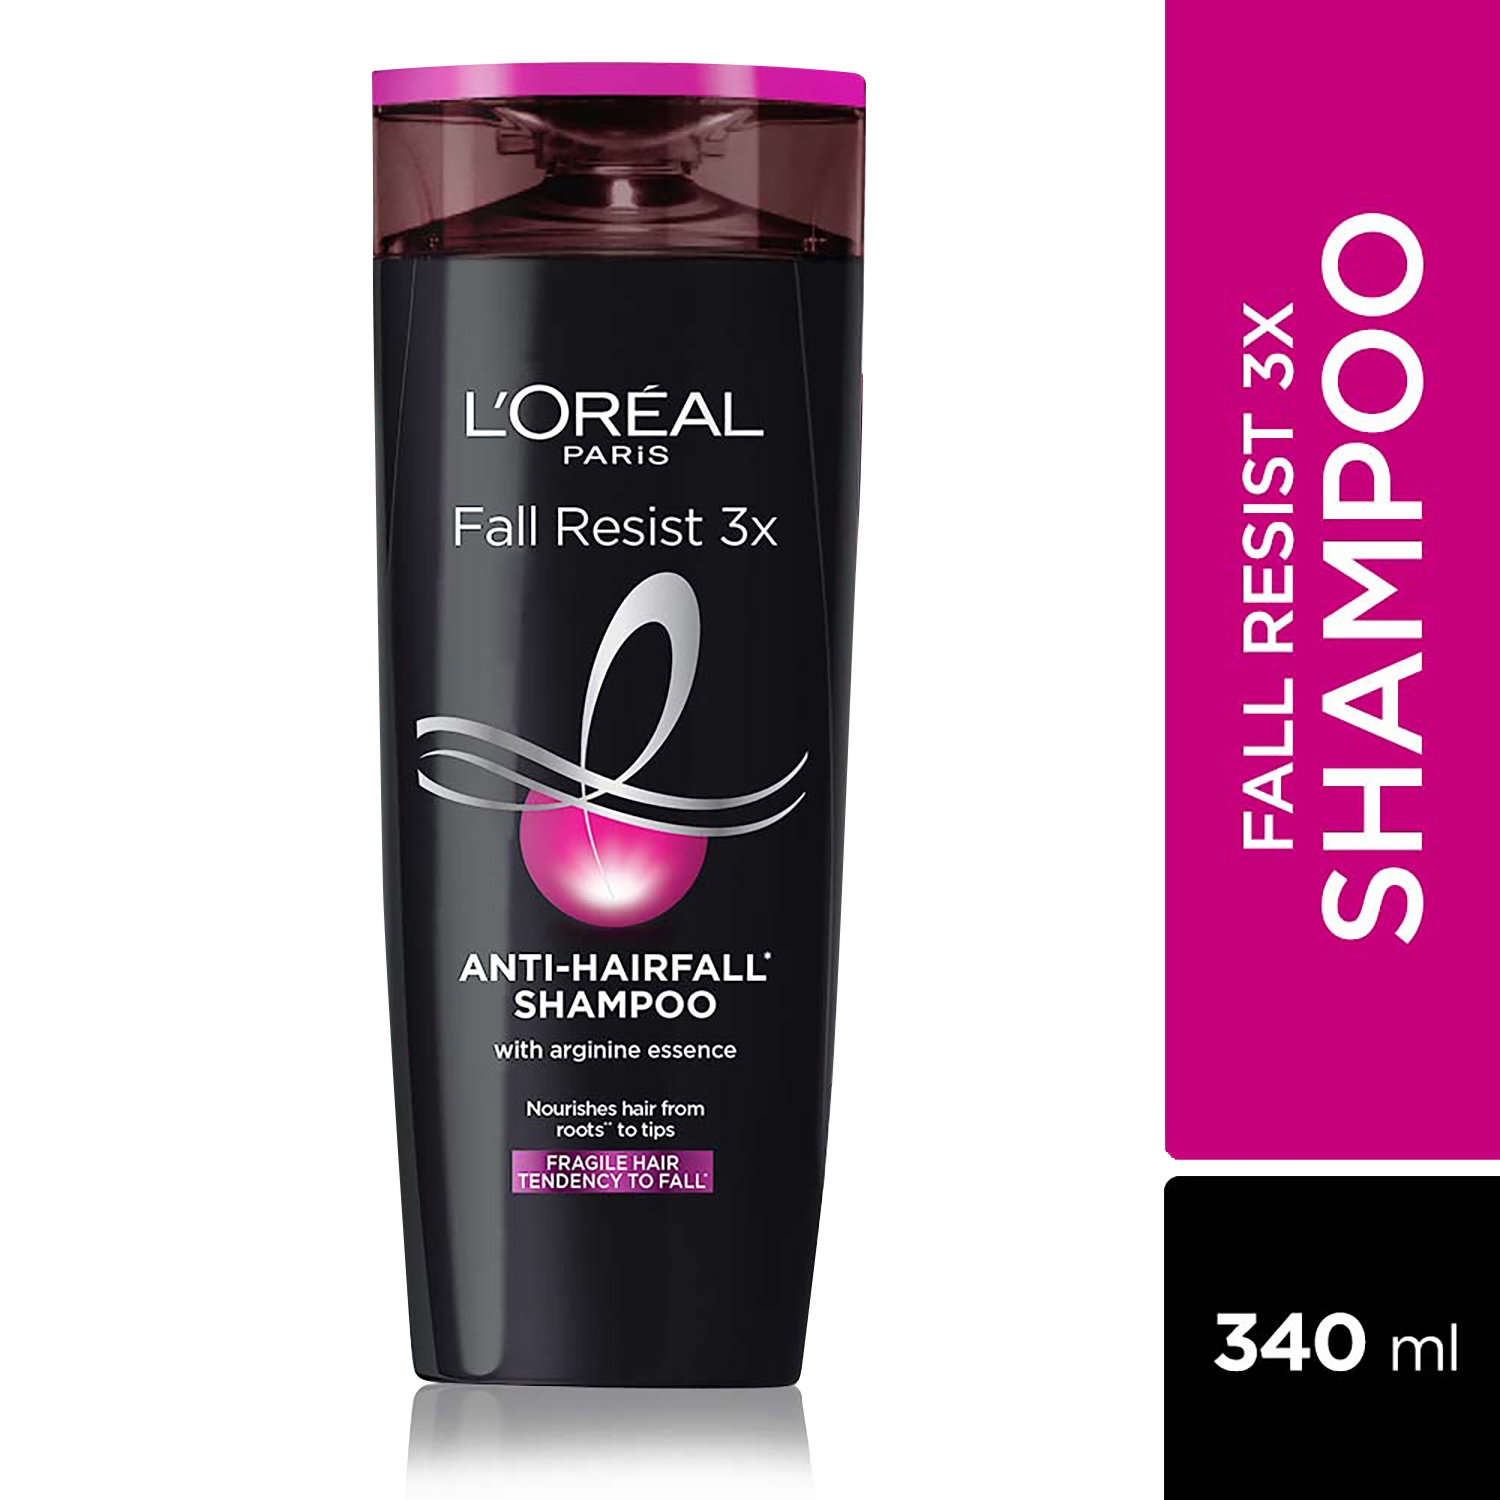 L'Oreal Paris | L'Oreal Paris Fall Resist 3X Anti-Hairfall Shampoo (340ml)